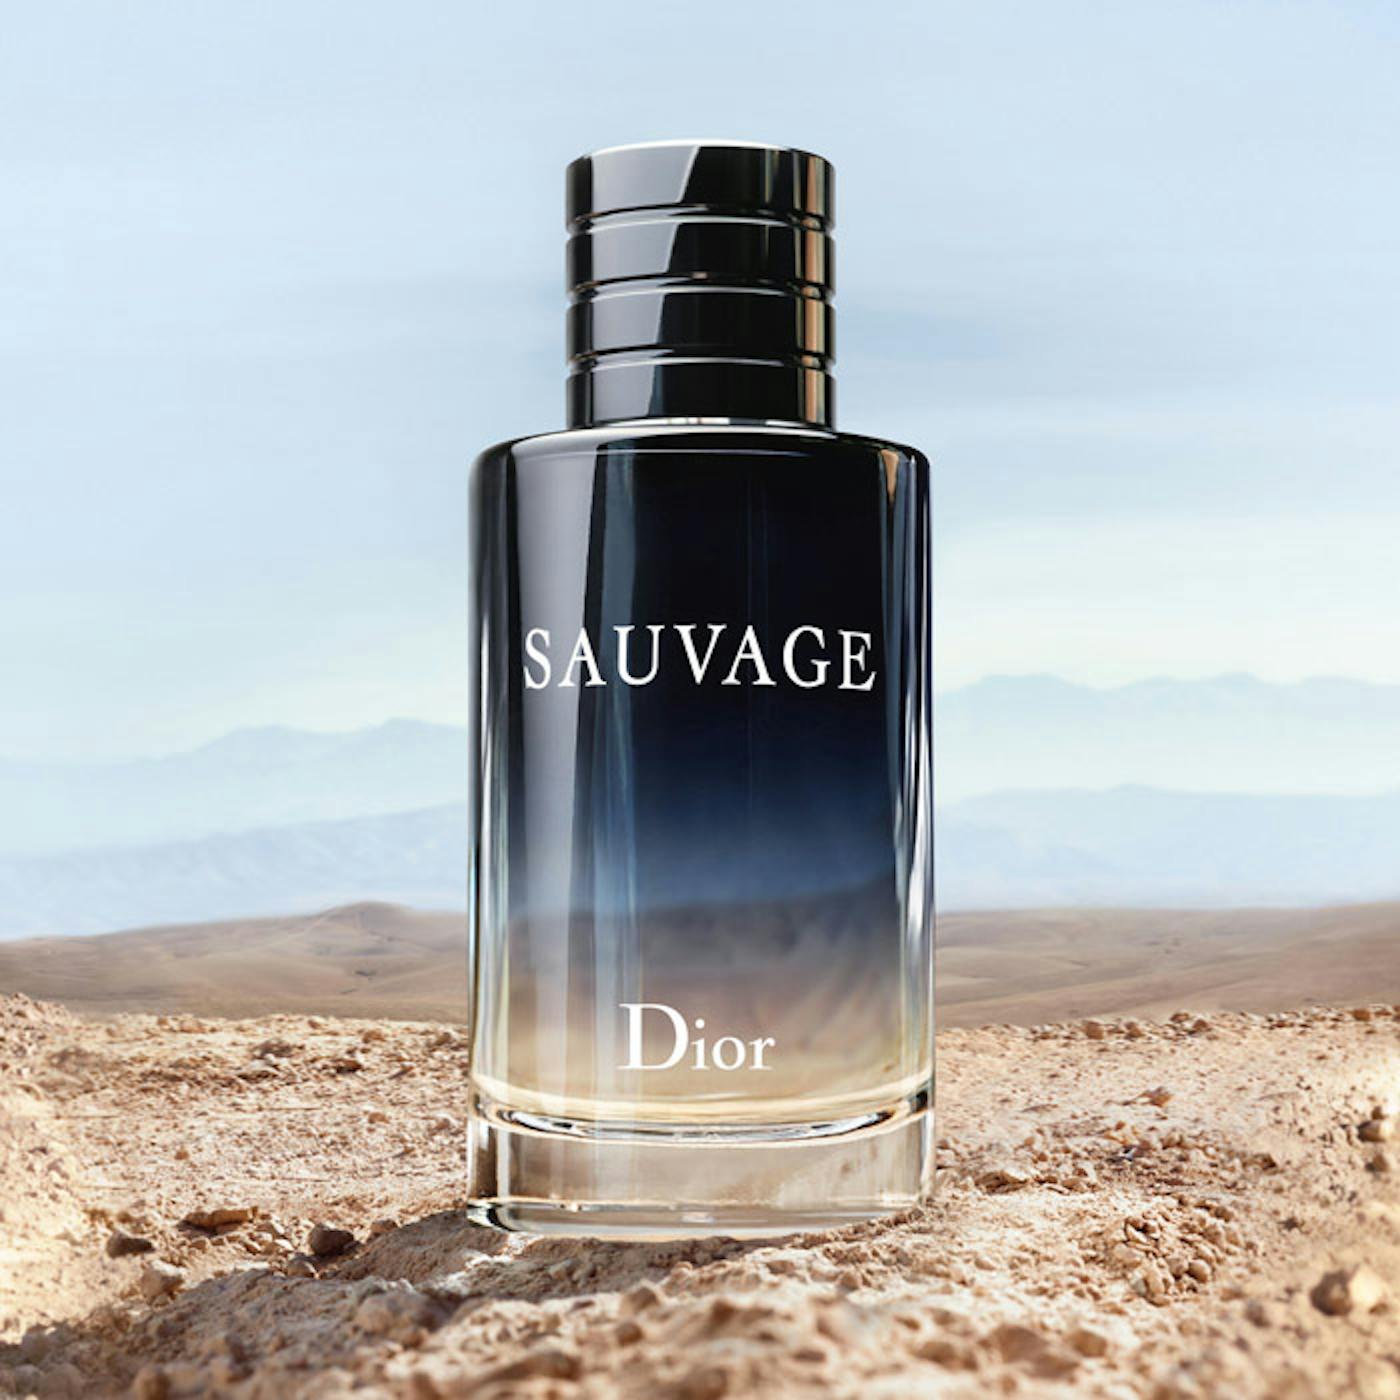 Dior Sauvage 200ml Spray, Sauvage Eau De Toilette Parfum for Men